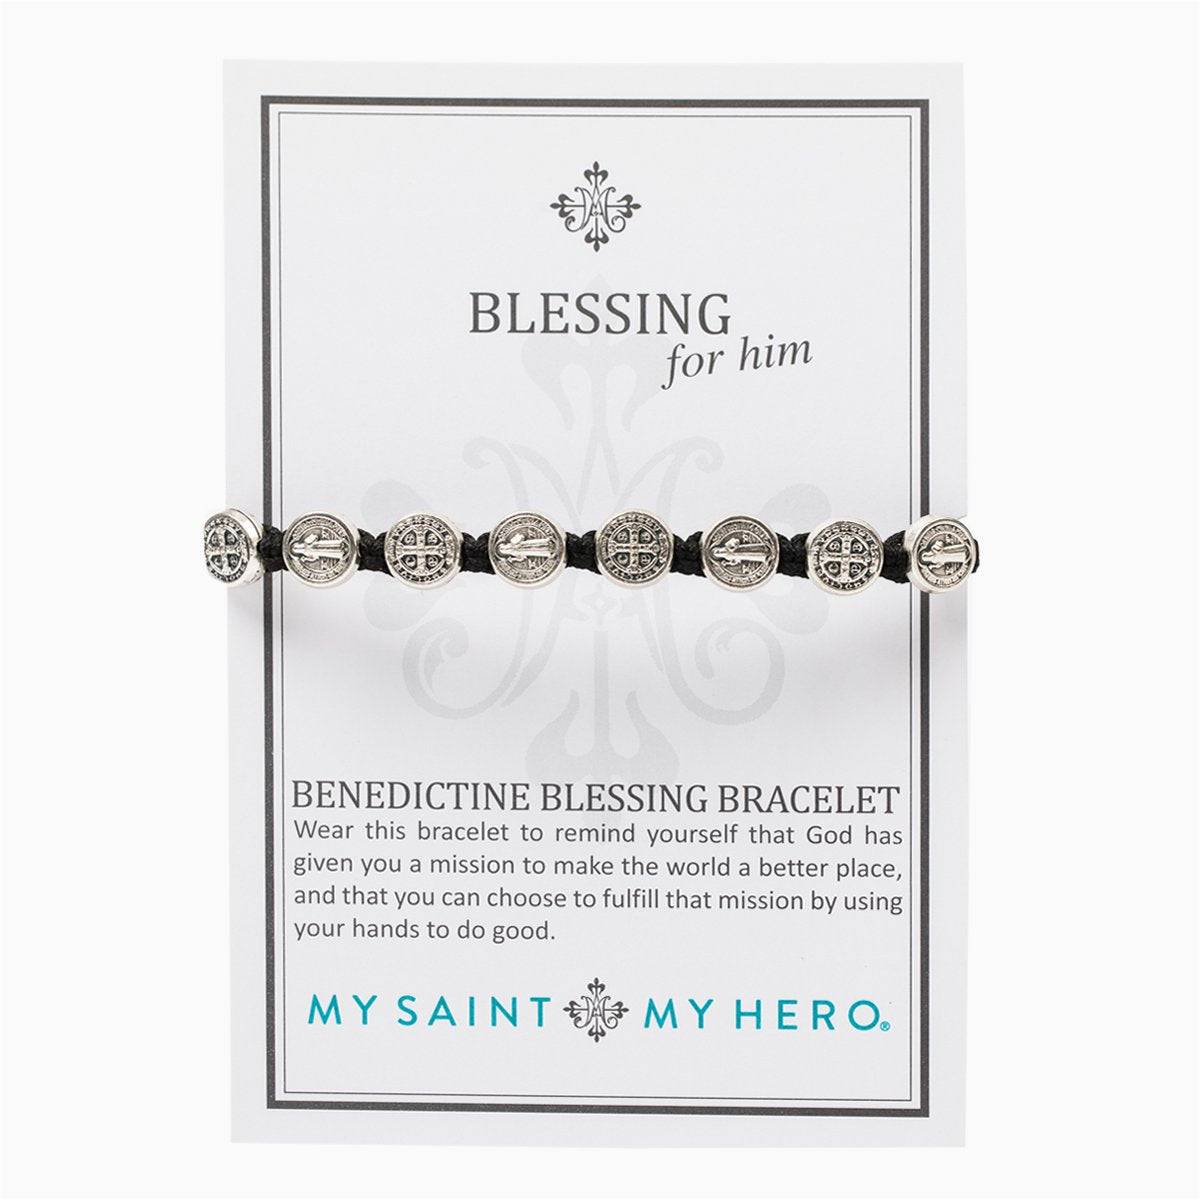 My Saint My Hero- Benedictine Blessing Bracelet for Him - Findlay Rowe Designs